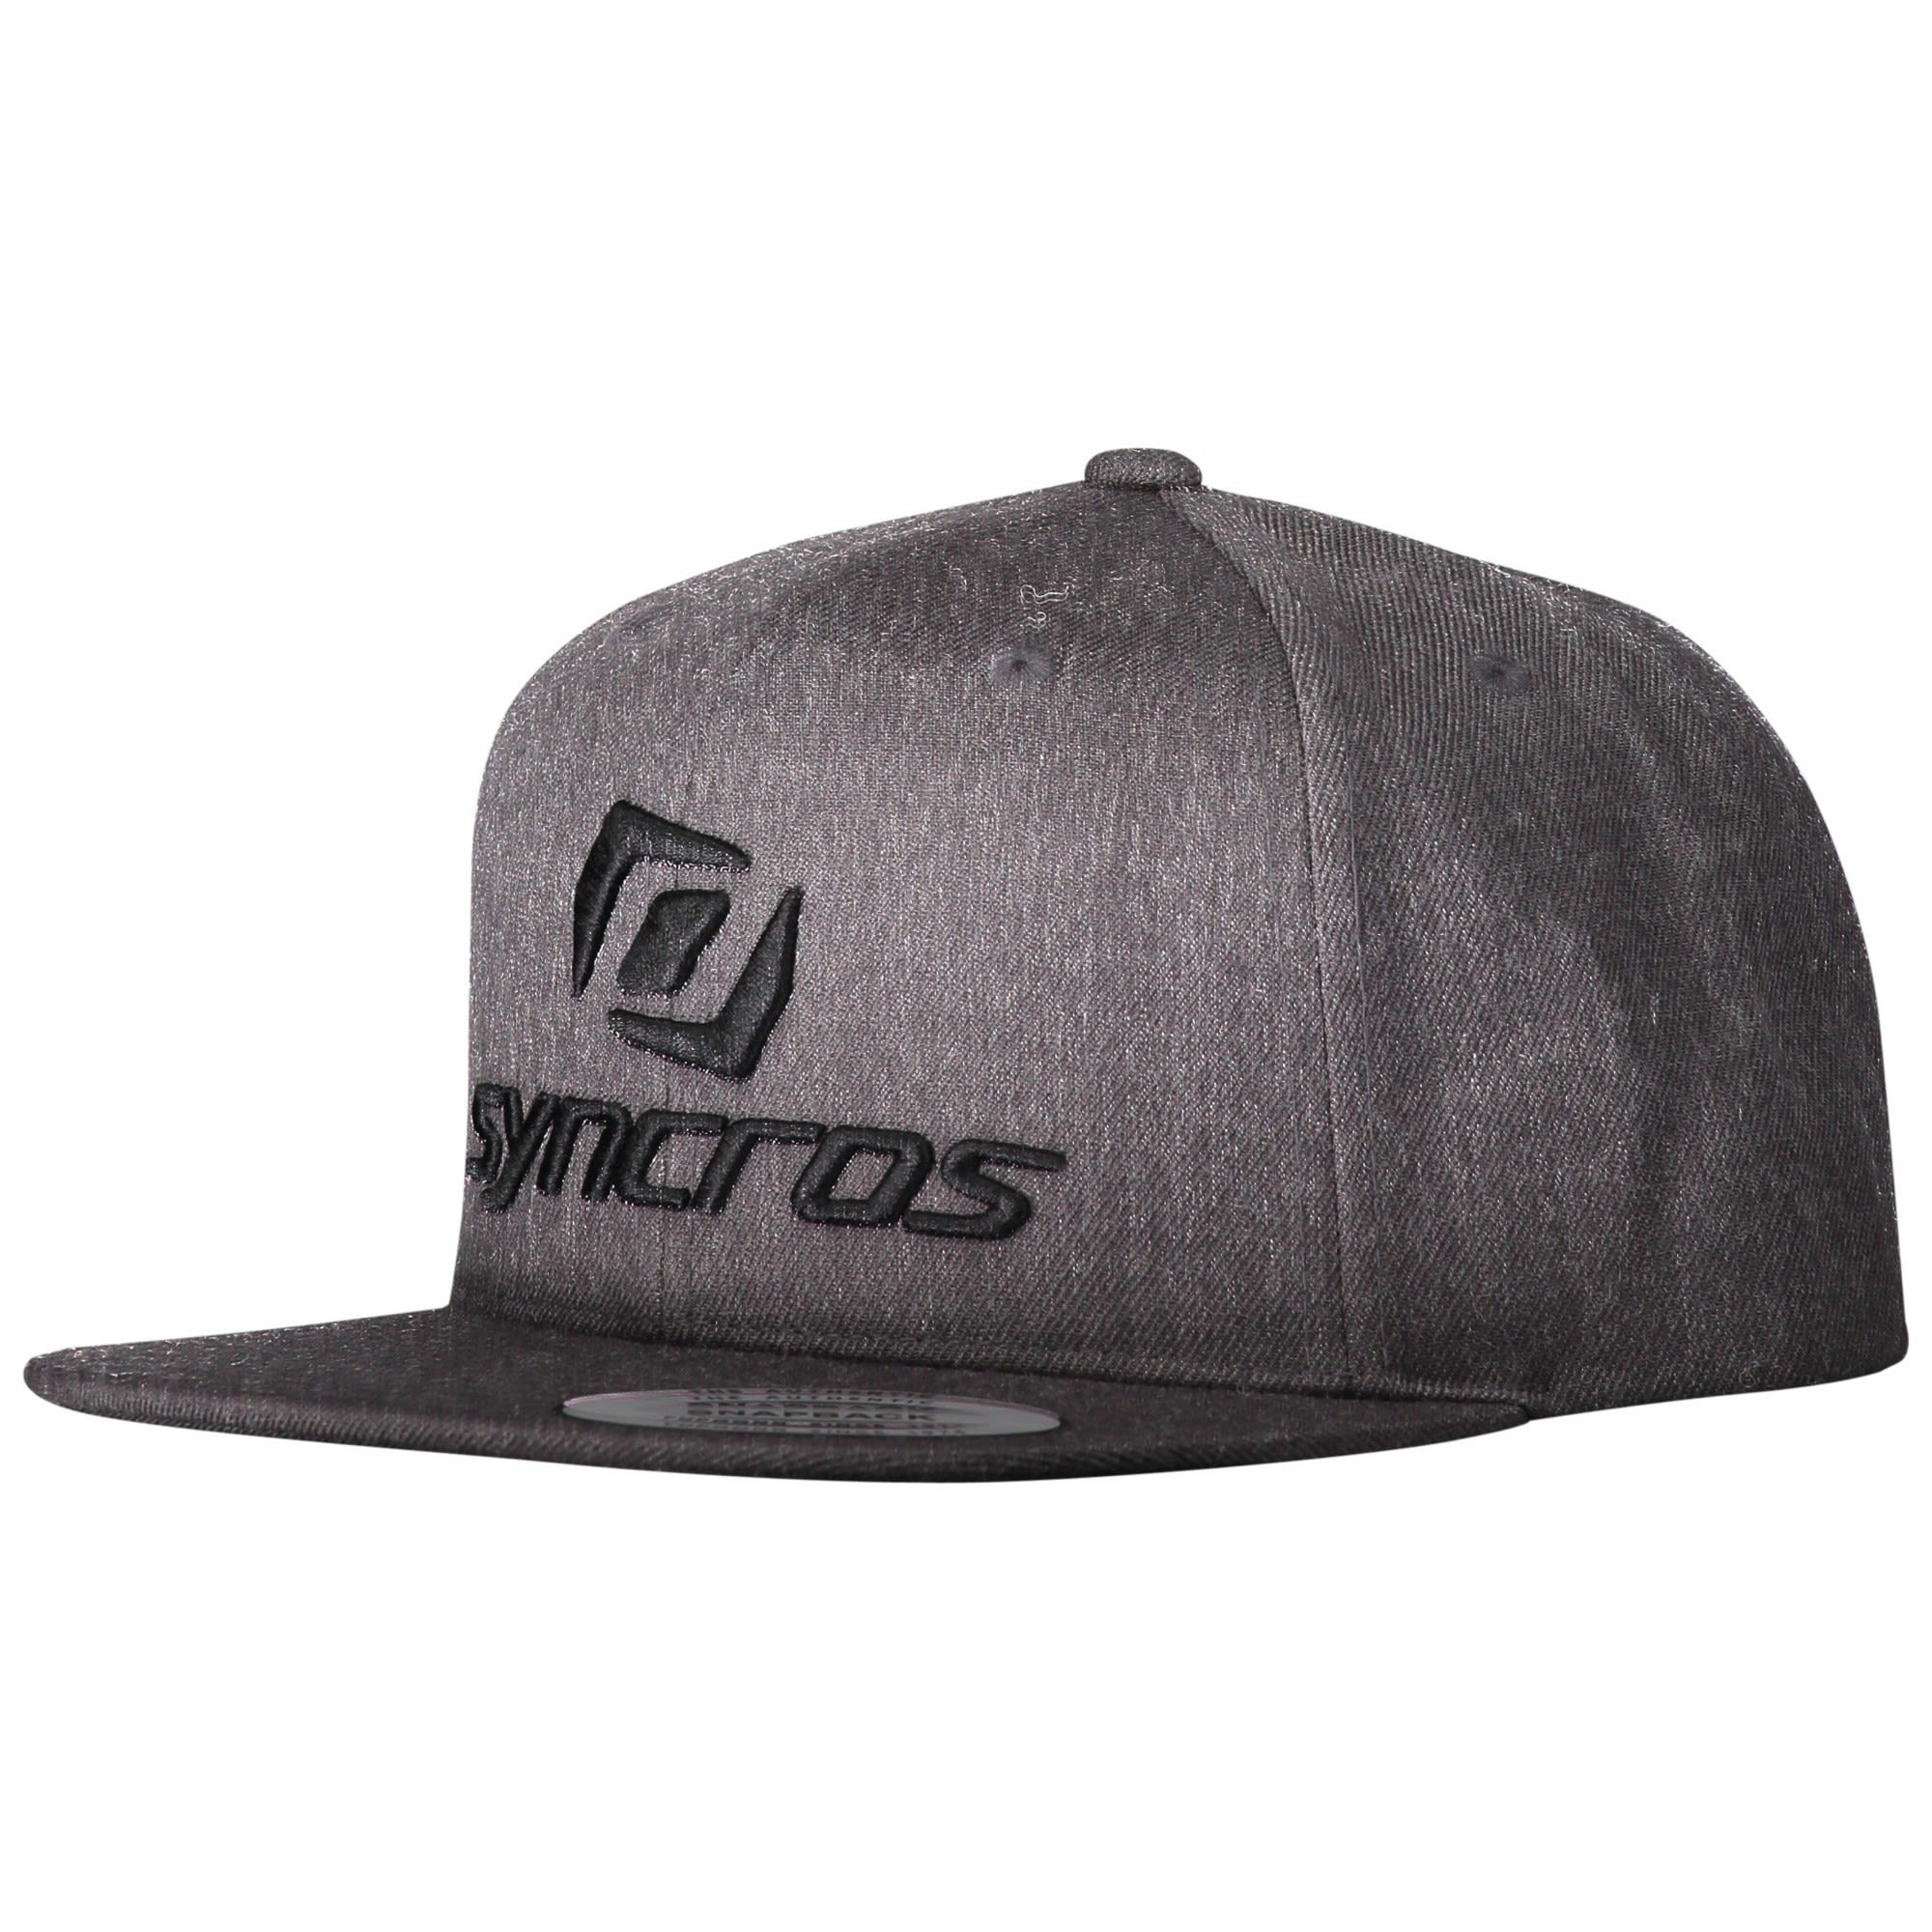 Syncros Precision Cap Grau- Kopfbedeckungen- Grsse One Size - Farbe Dark Grey Melange